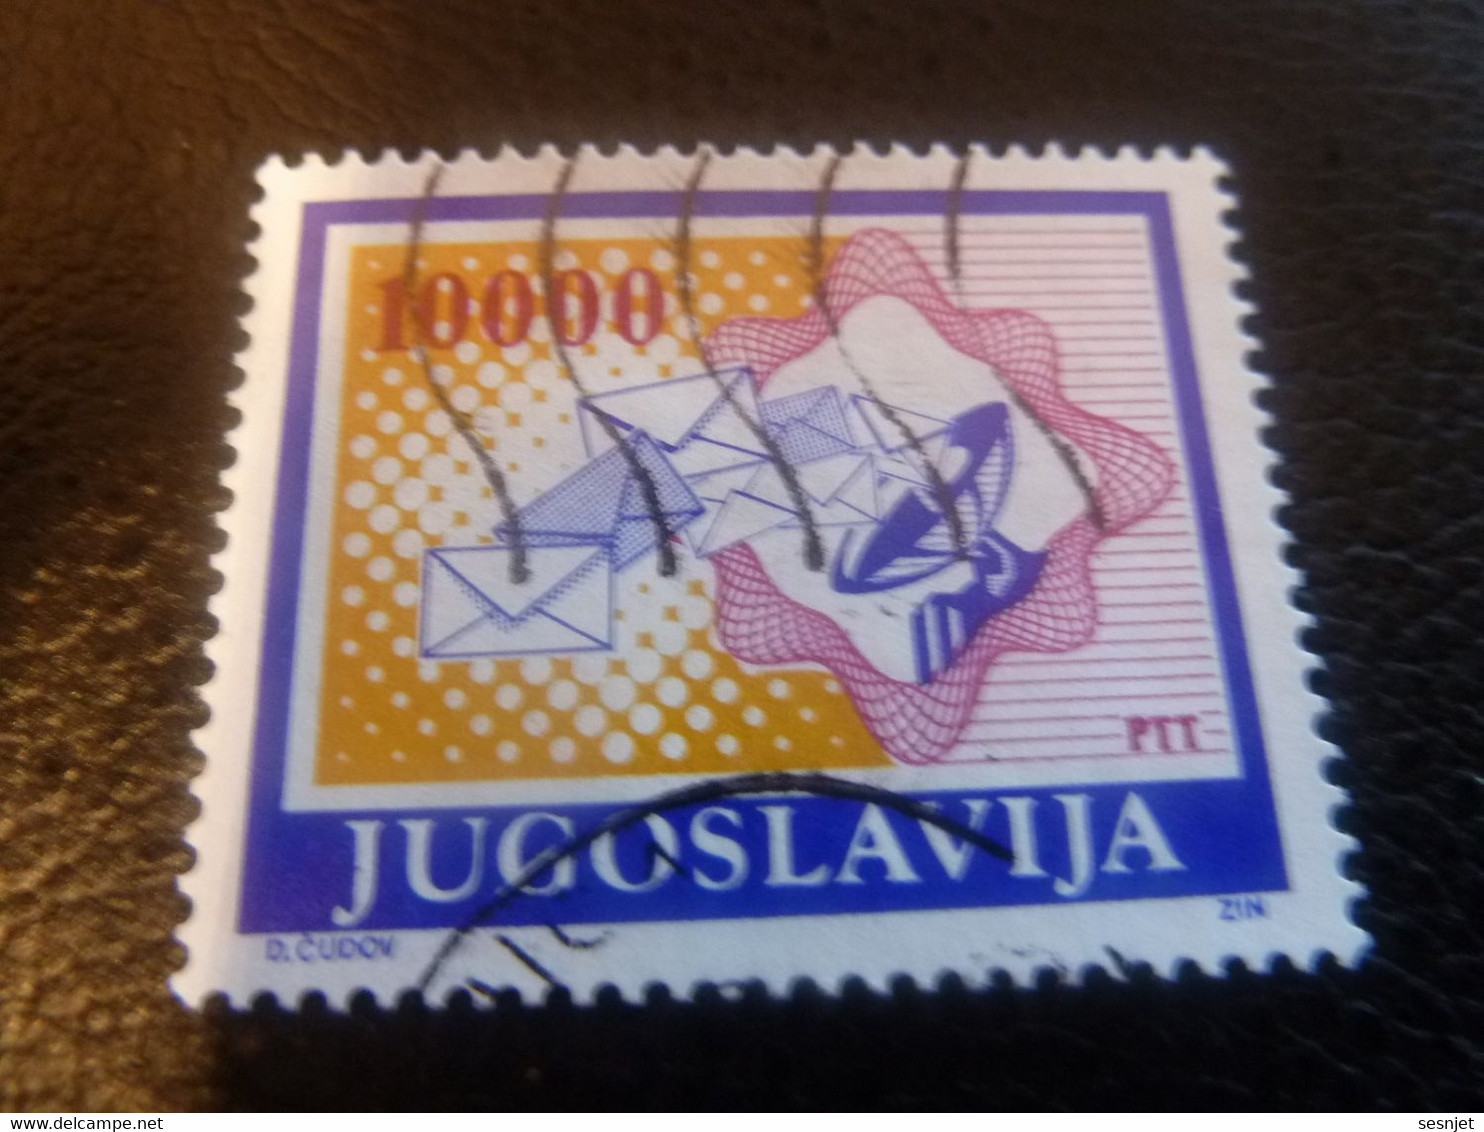 Ptt - Jugoslavija - D Cudov - Val 10000 - Multicolore - Oblitéré - - Gebraucht